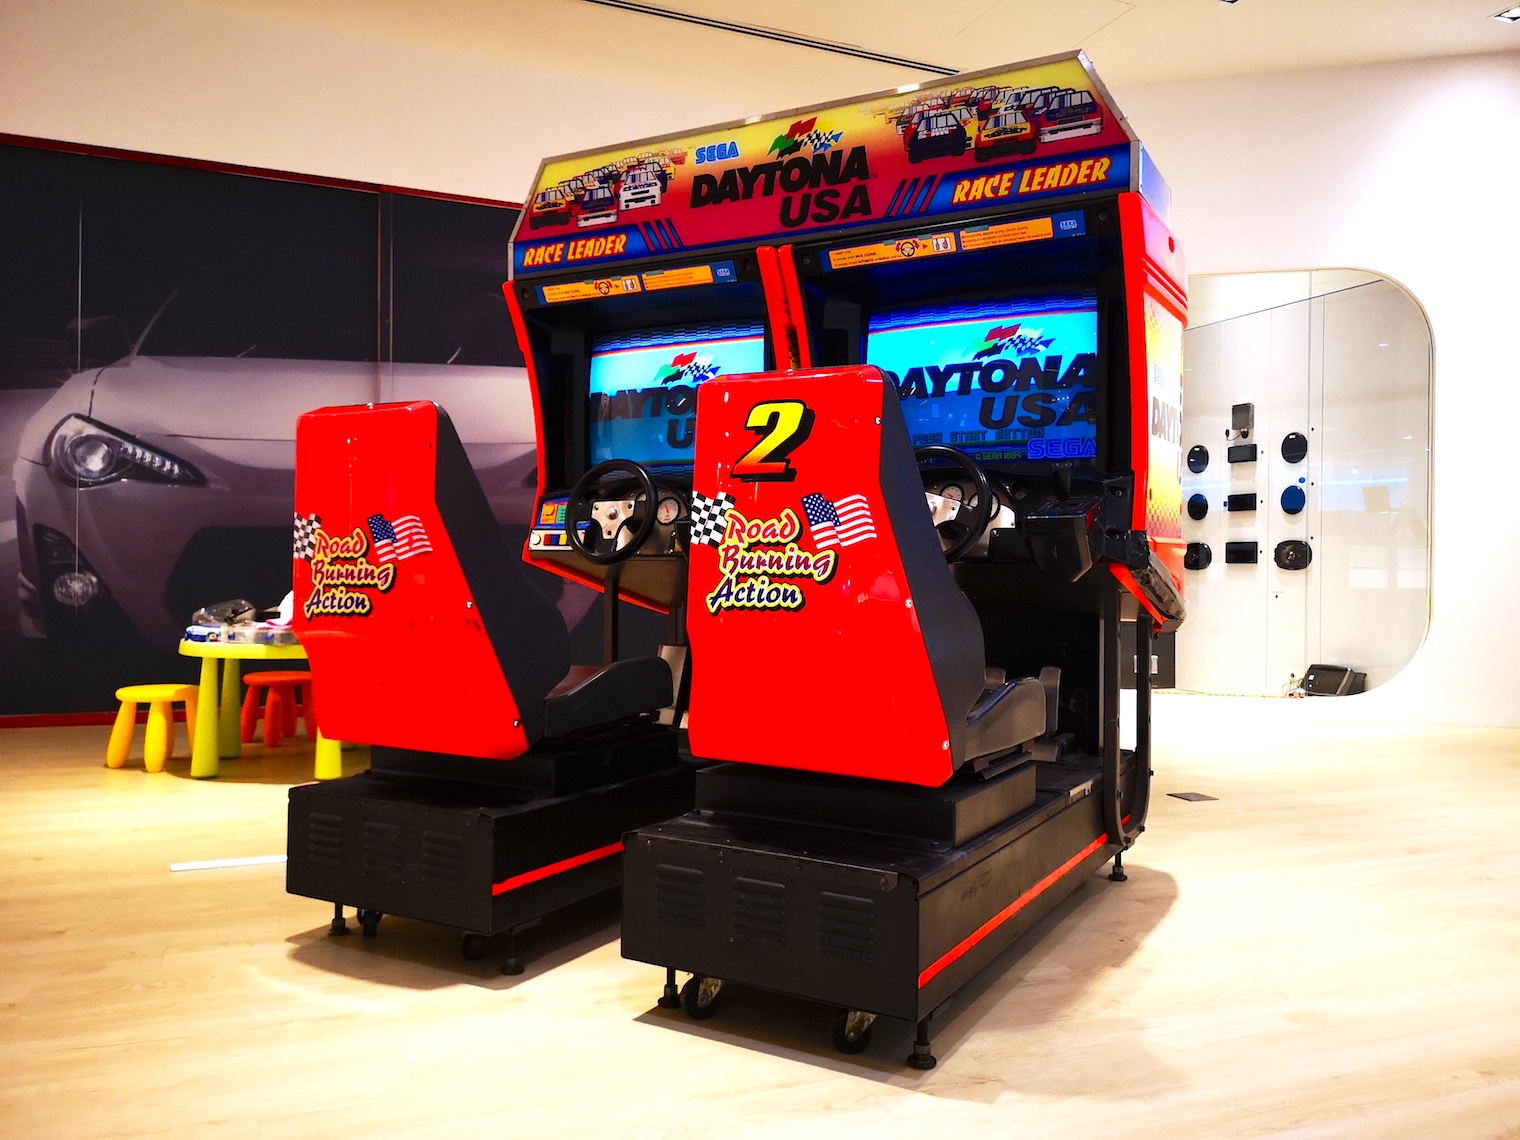 Daytona Arcade Rental Singapore